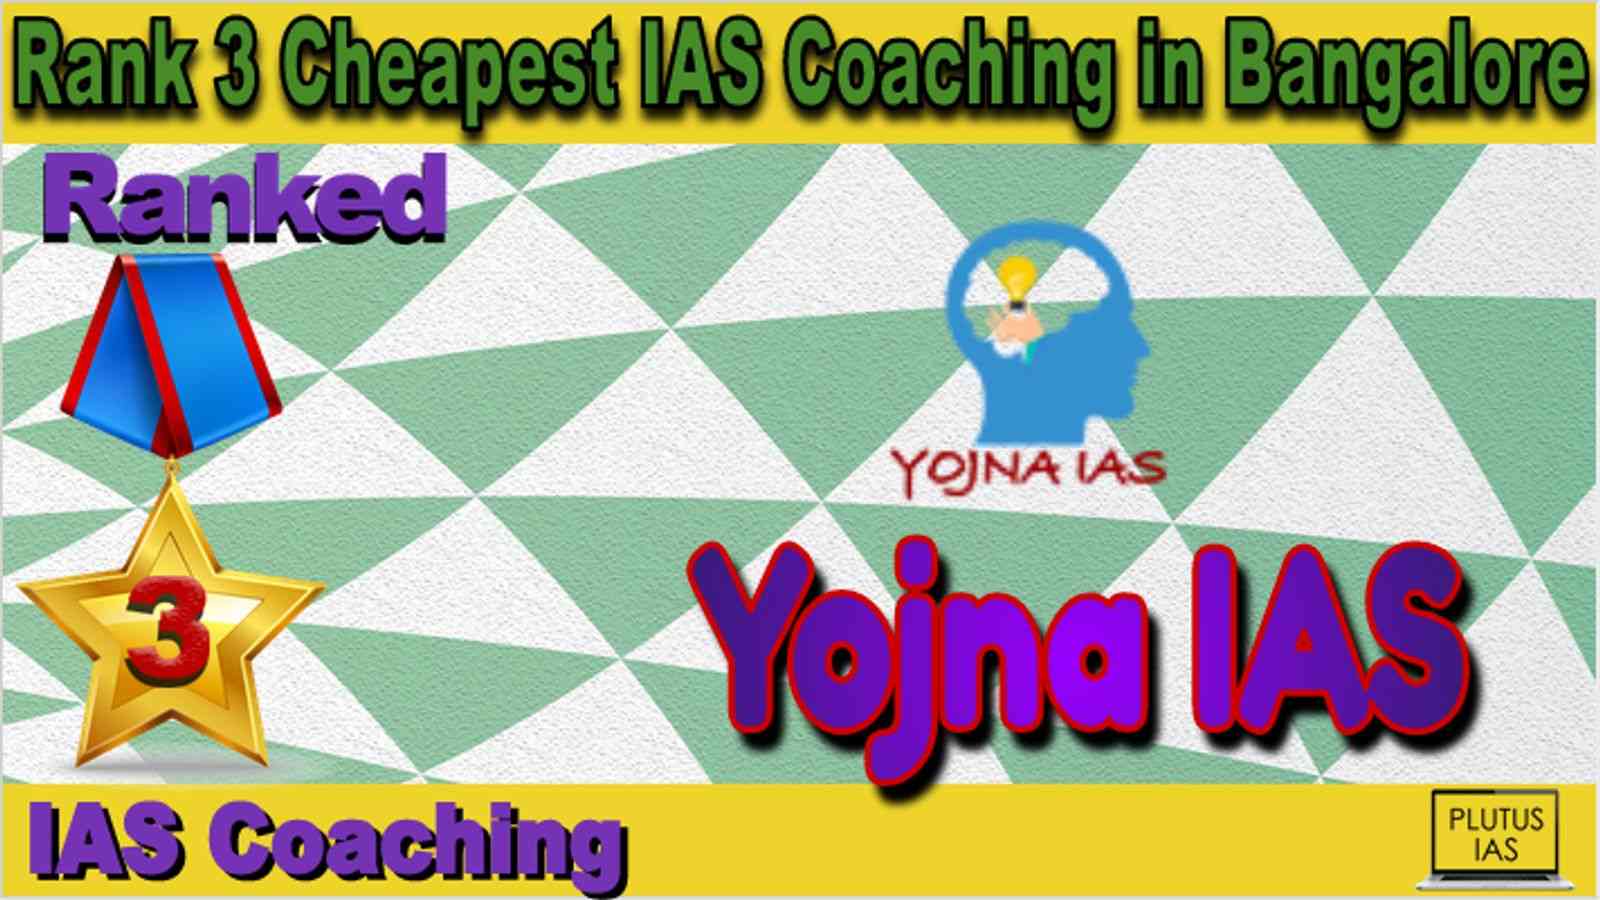 Rank 3 Cheapest IAS Coaching in Bangalore